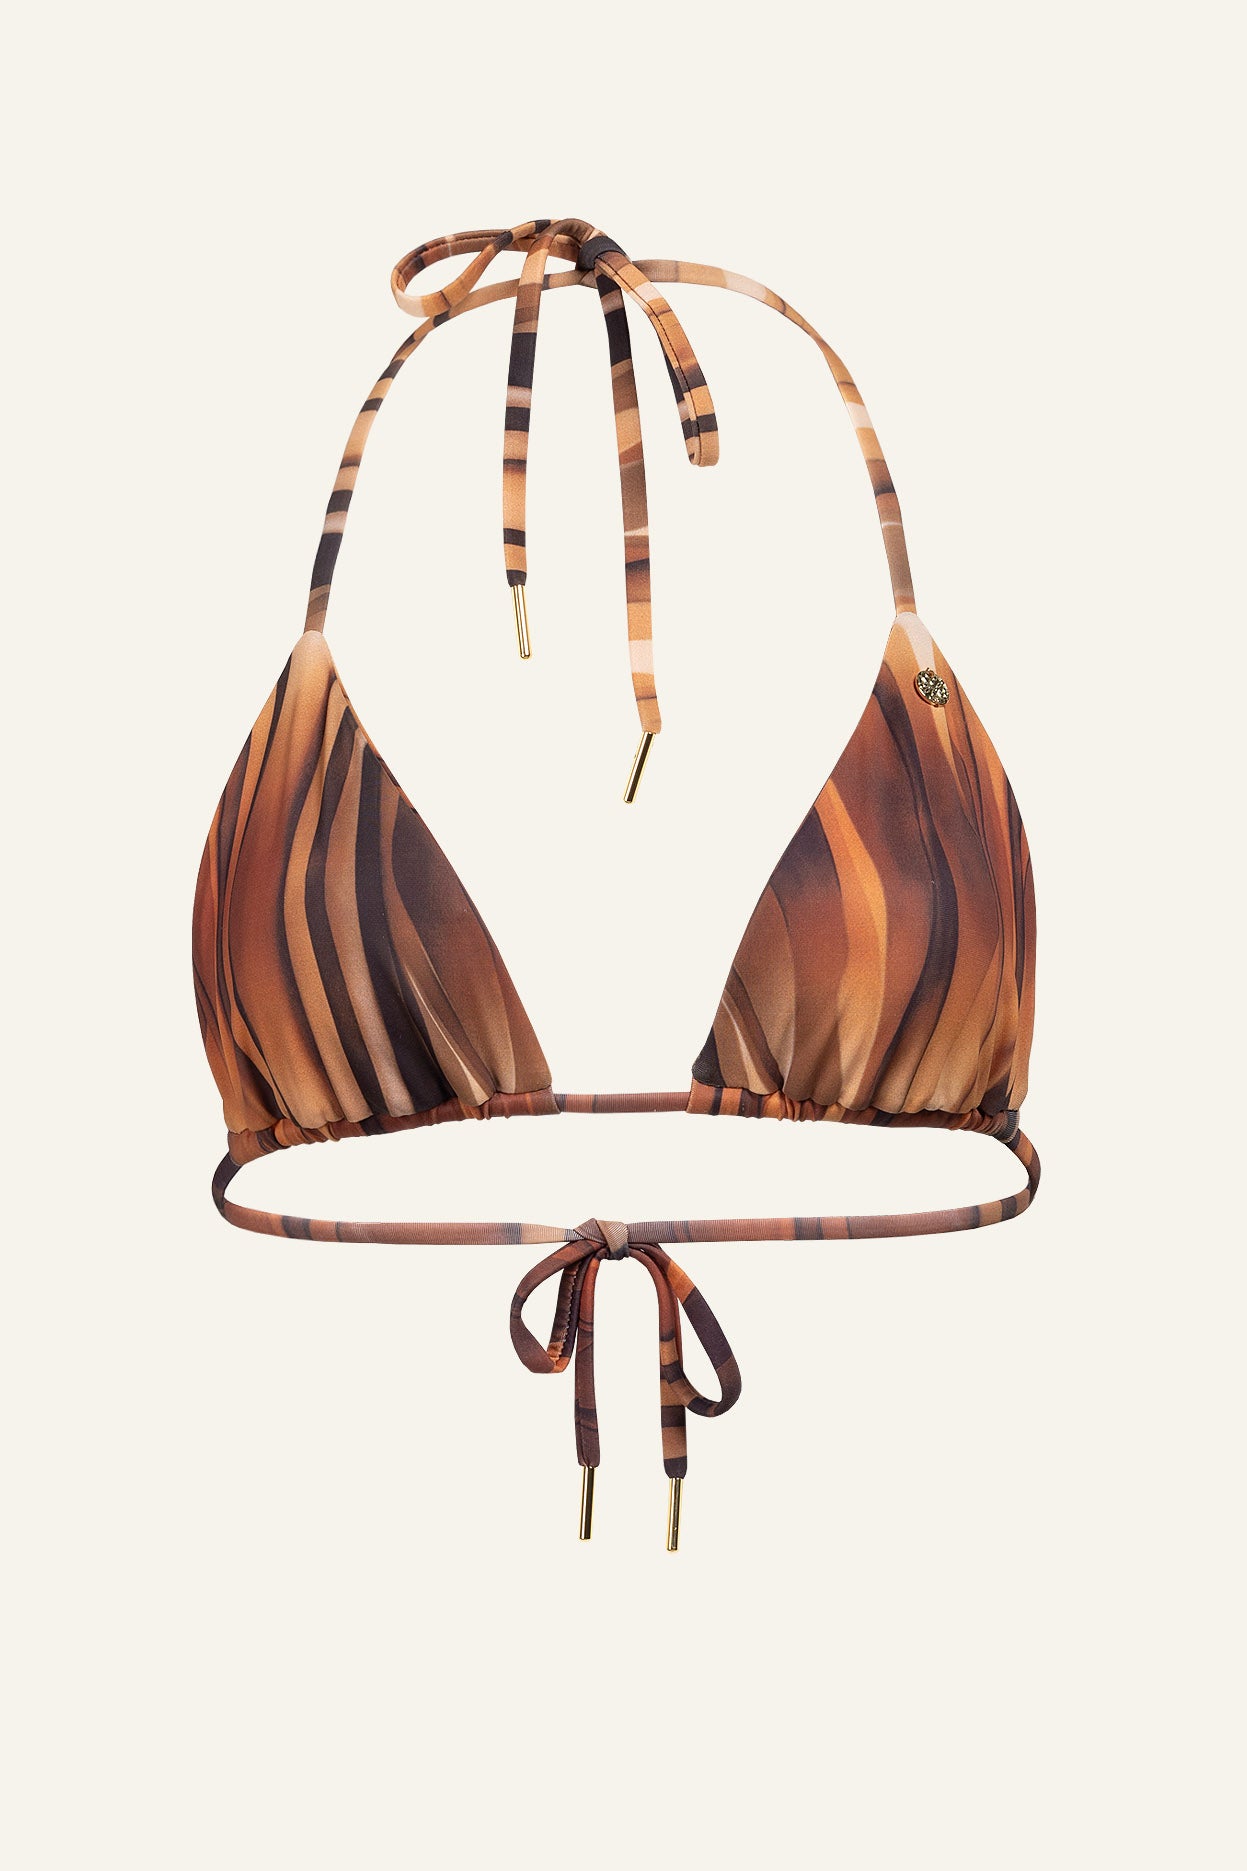 Zia Caramel Tiger Bikini (Thong)